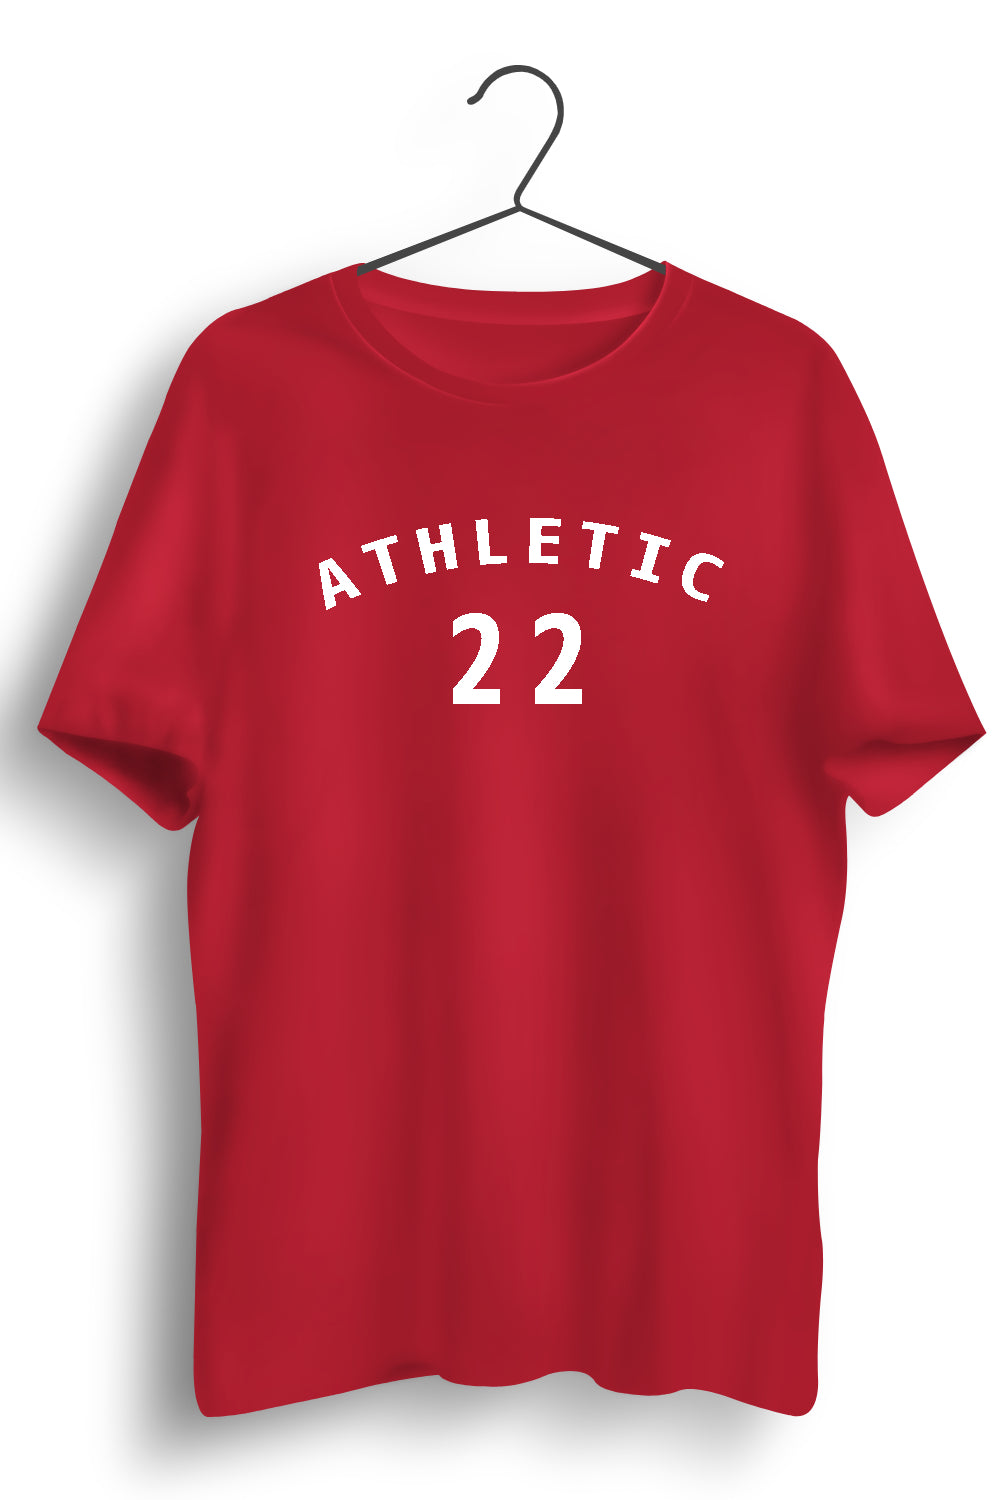 Athletic 22 Graphic Printed Red Tshirt